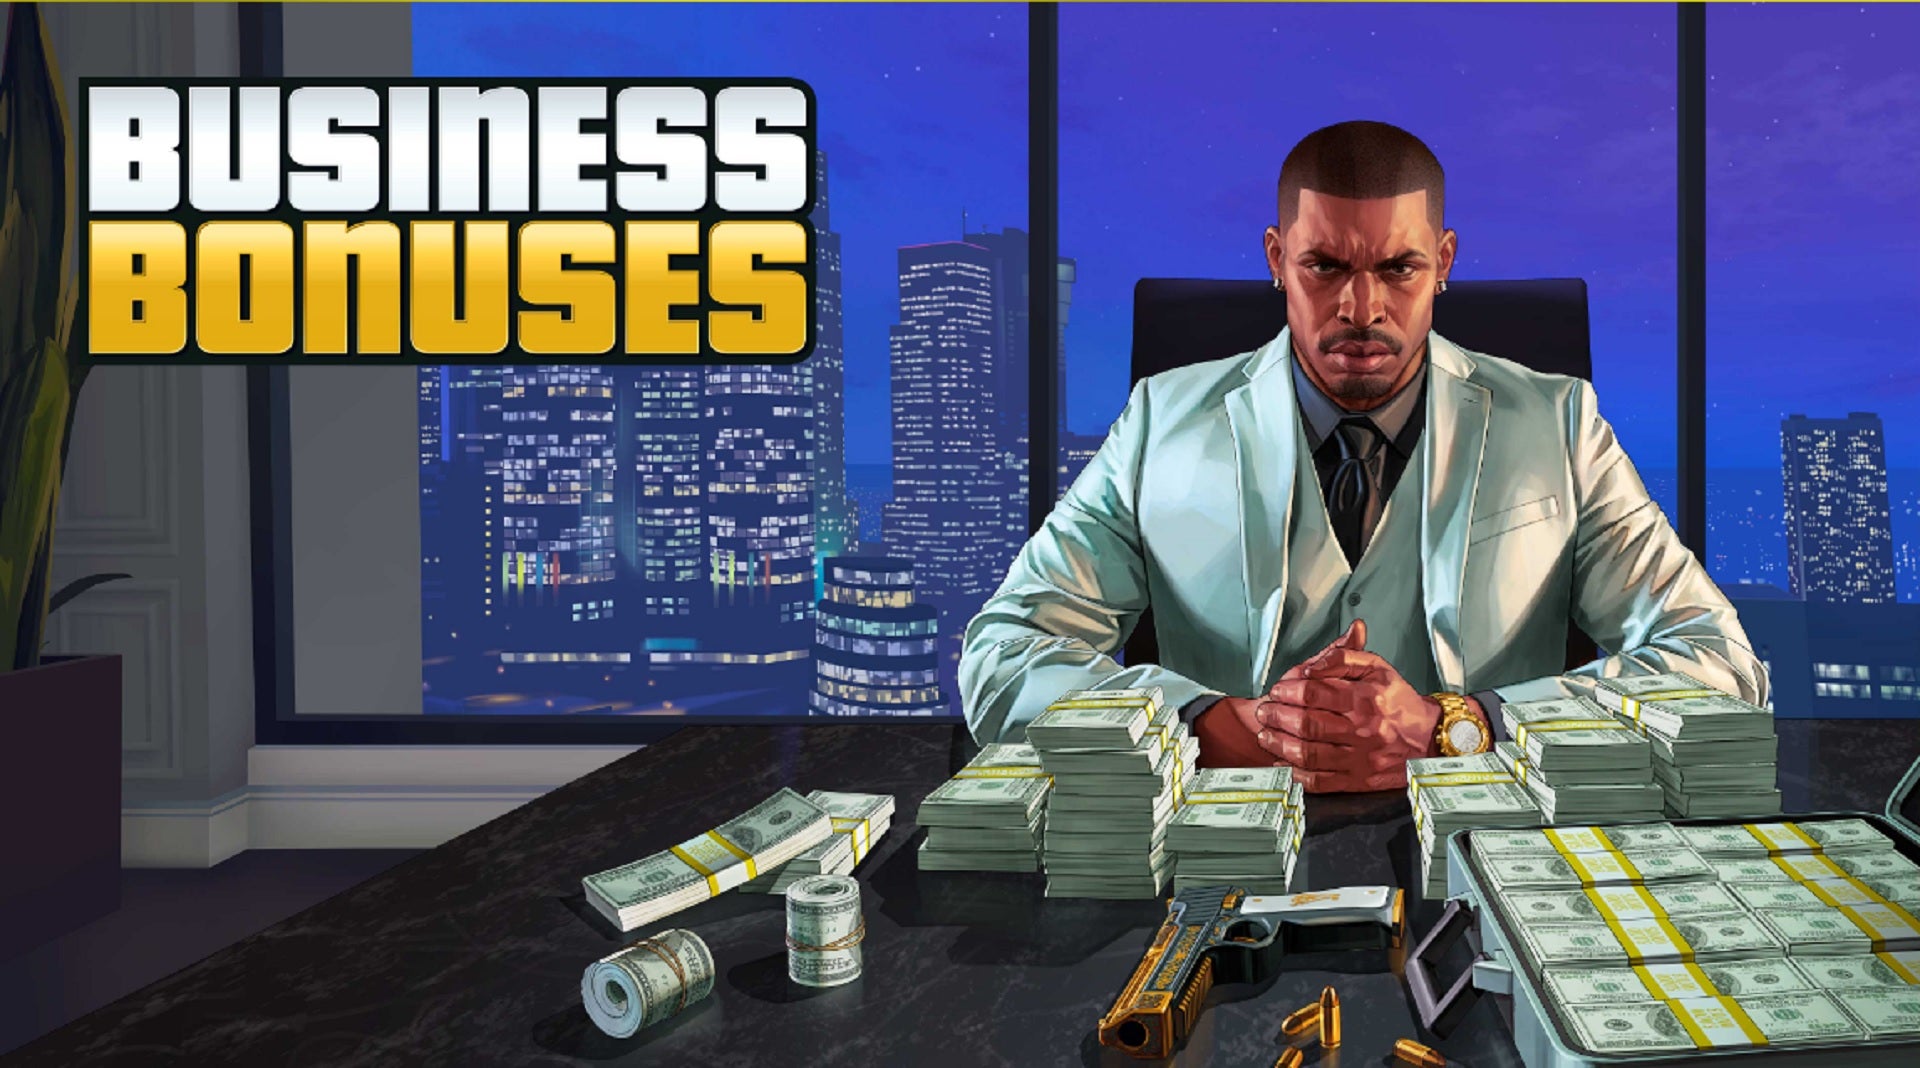 official art for business battles in GTA Online via Newswire